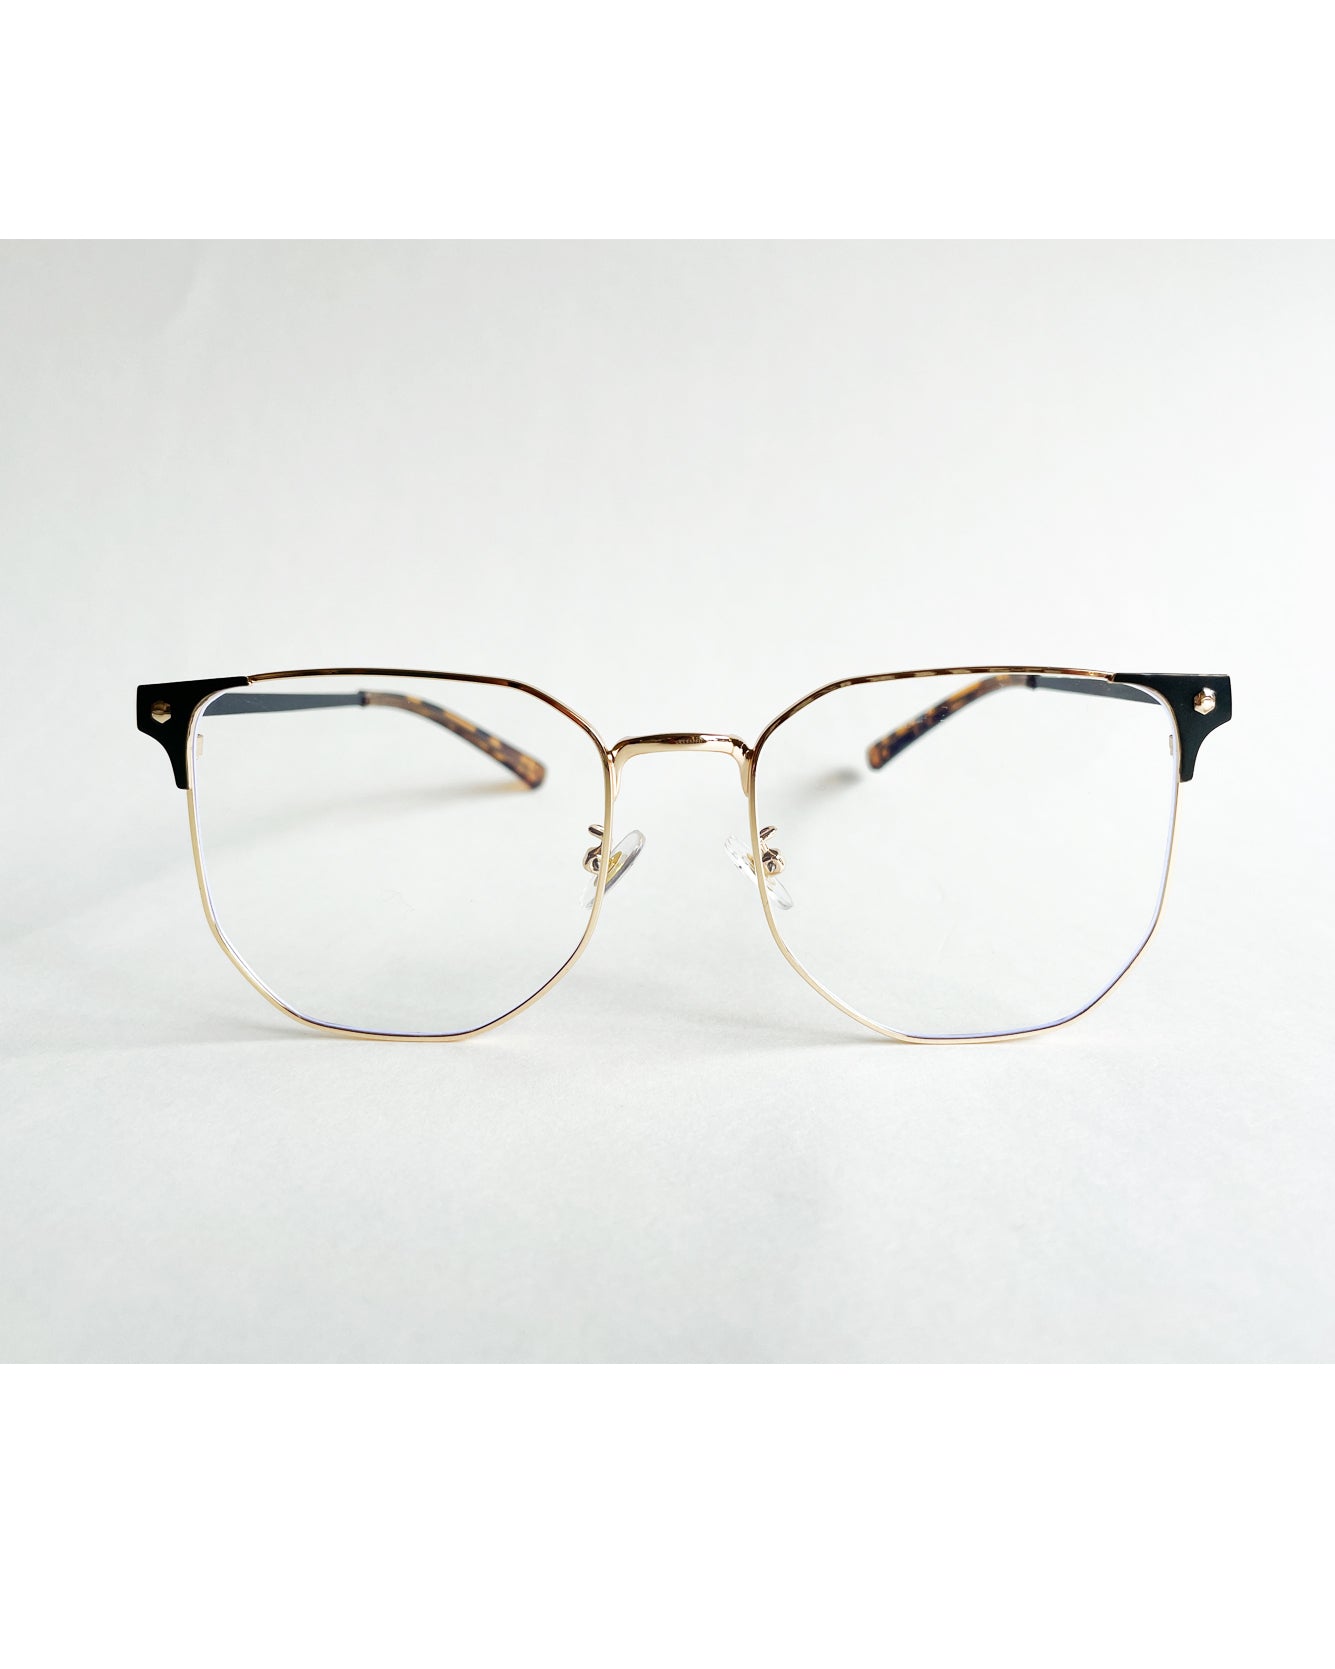 black & gold arms clear lense glasses *pre-order*